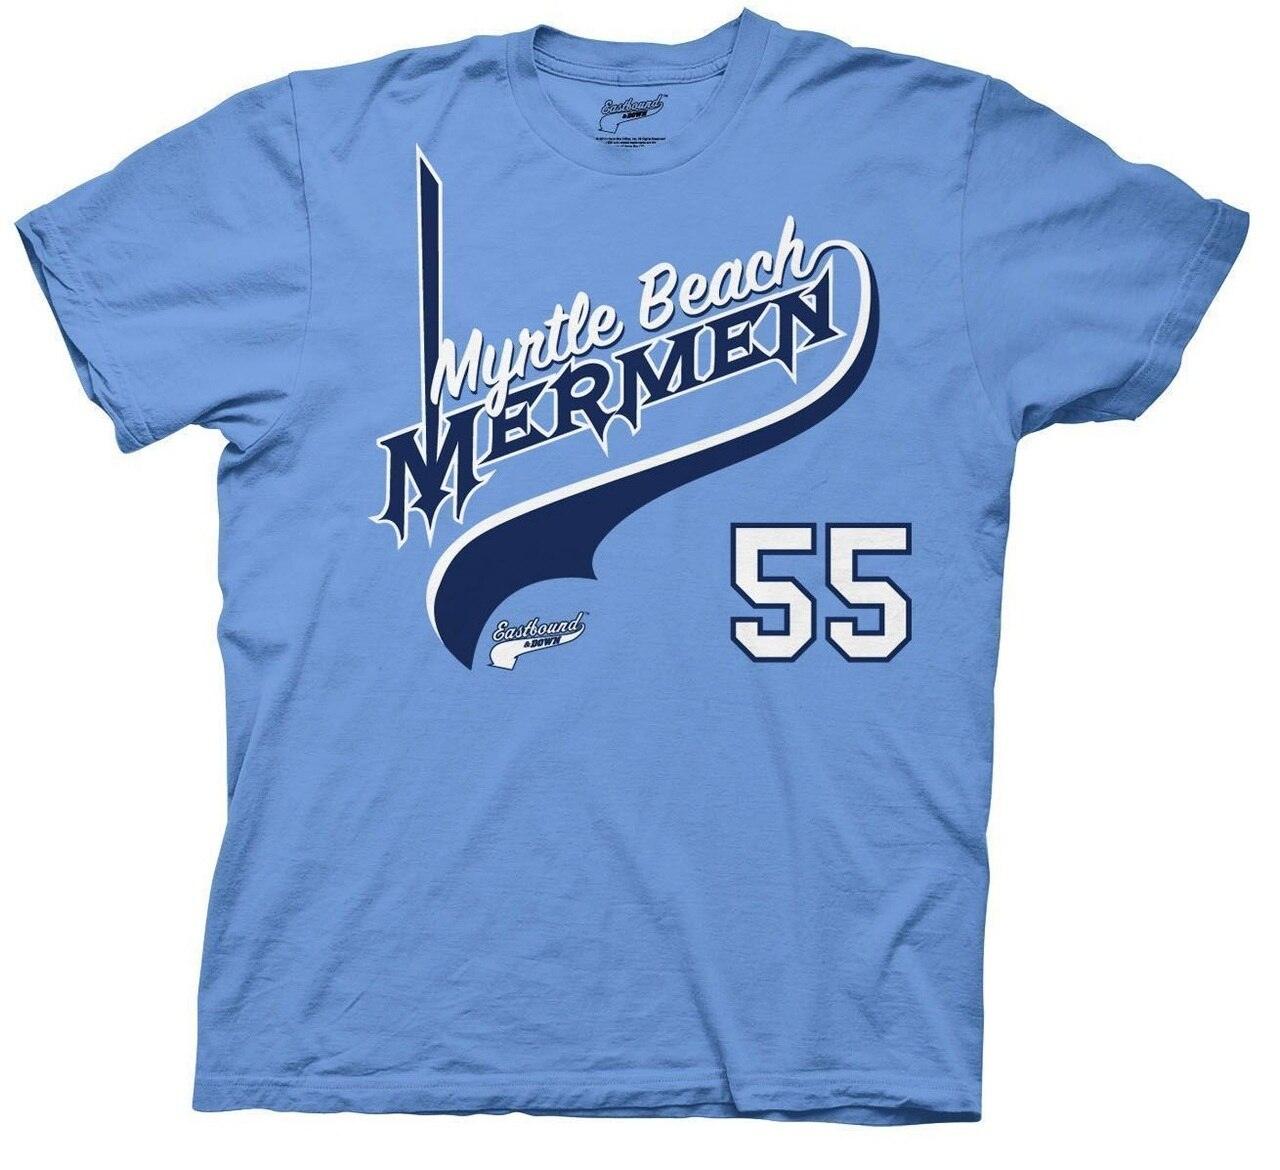 Myrtle Beach Mermen Logo 55 T-shirt-tvso